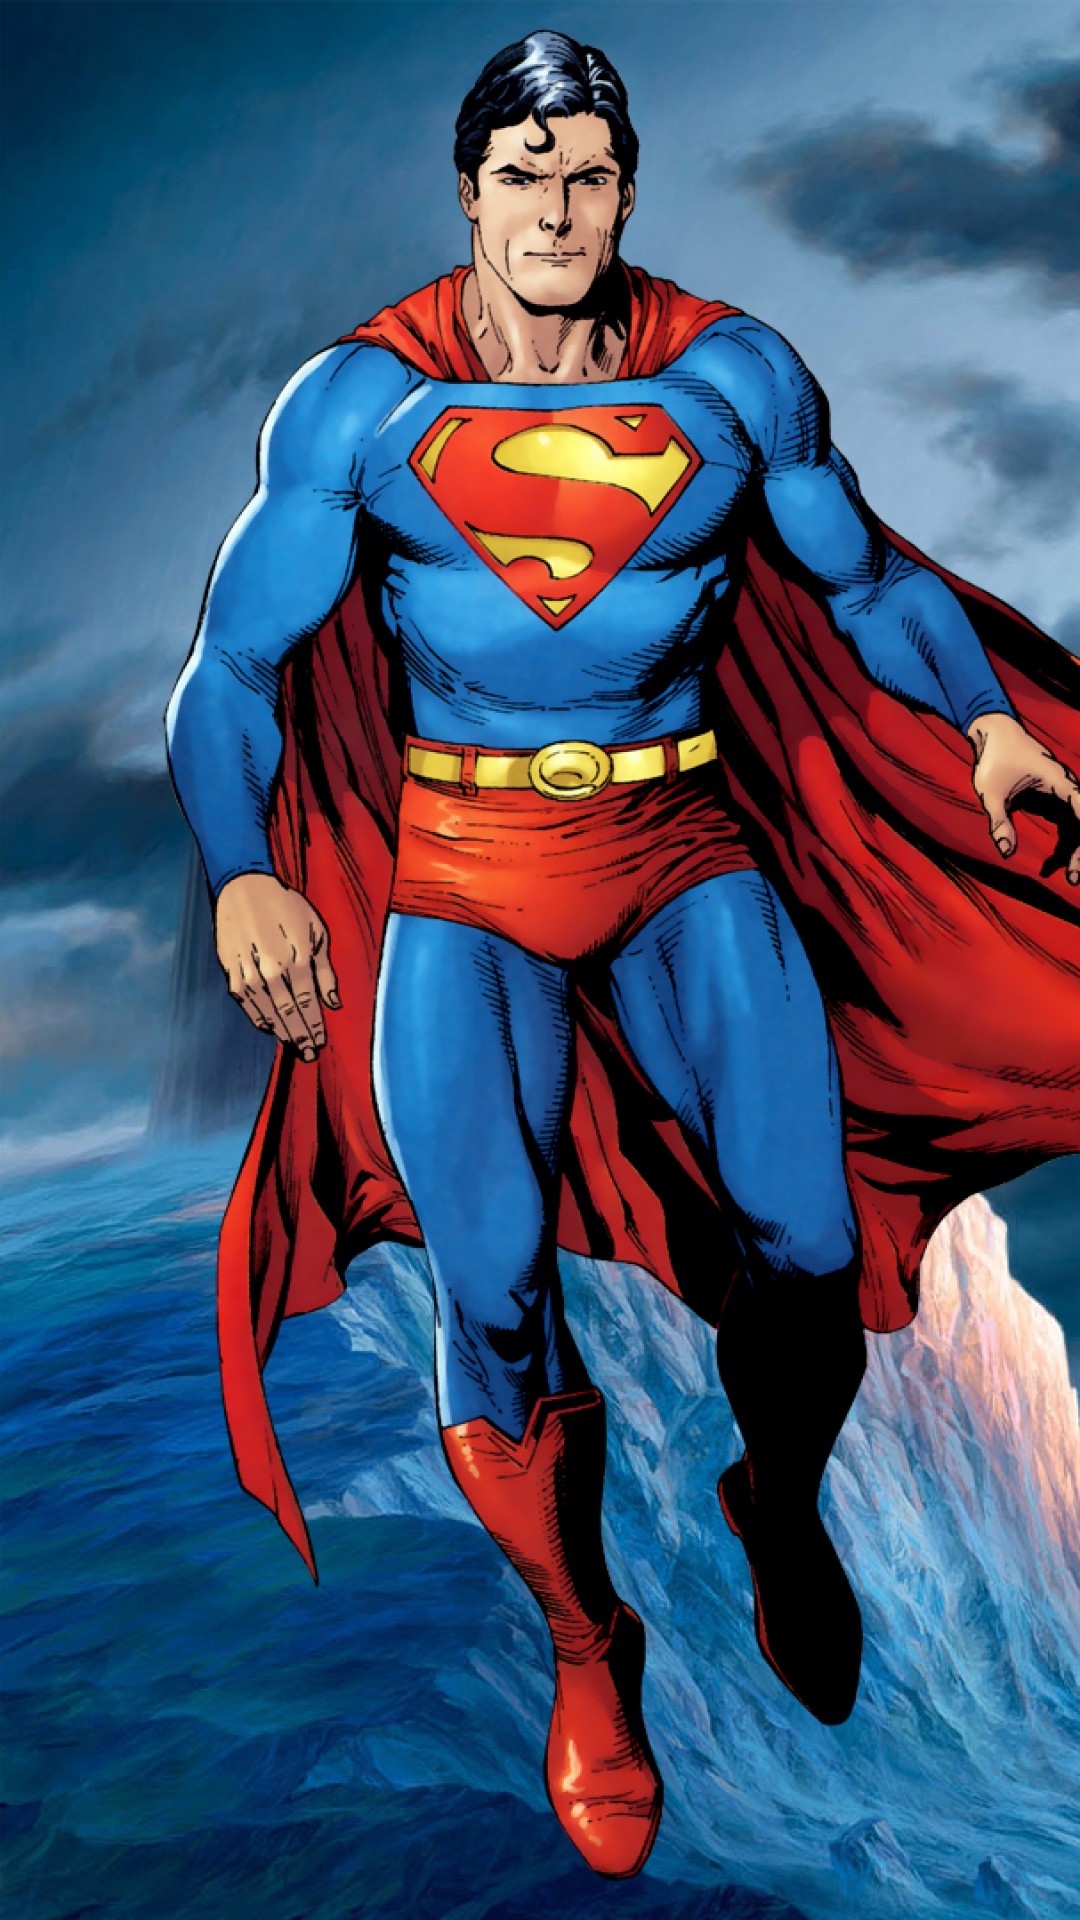 1080x1920 Superman Iphone Wallpaper #supermaniphonewallpaper